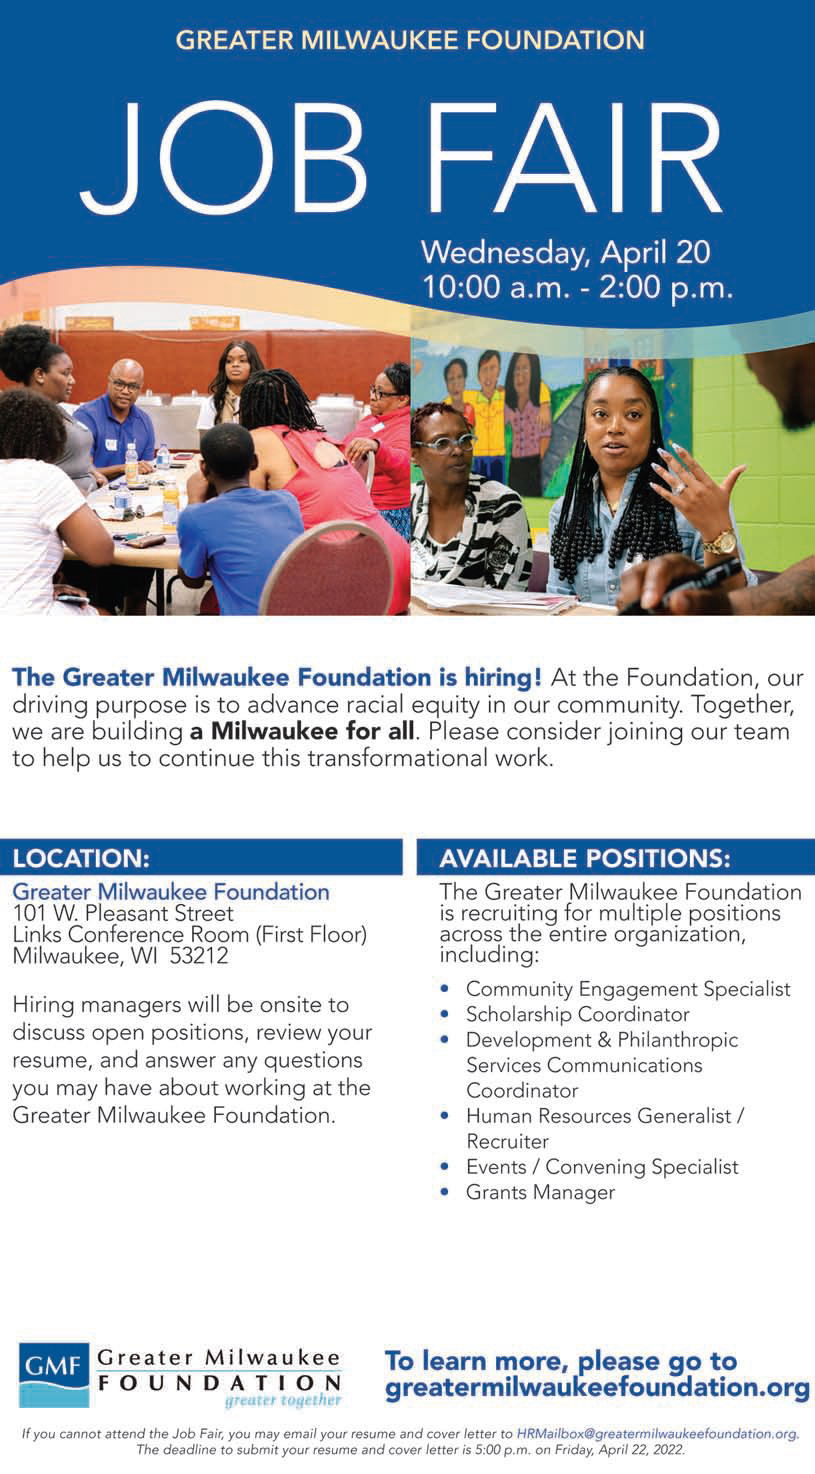 Greater Milwaukee Foundation Job Fair on Wednesday April 20 Milwaukee